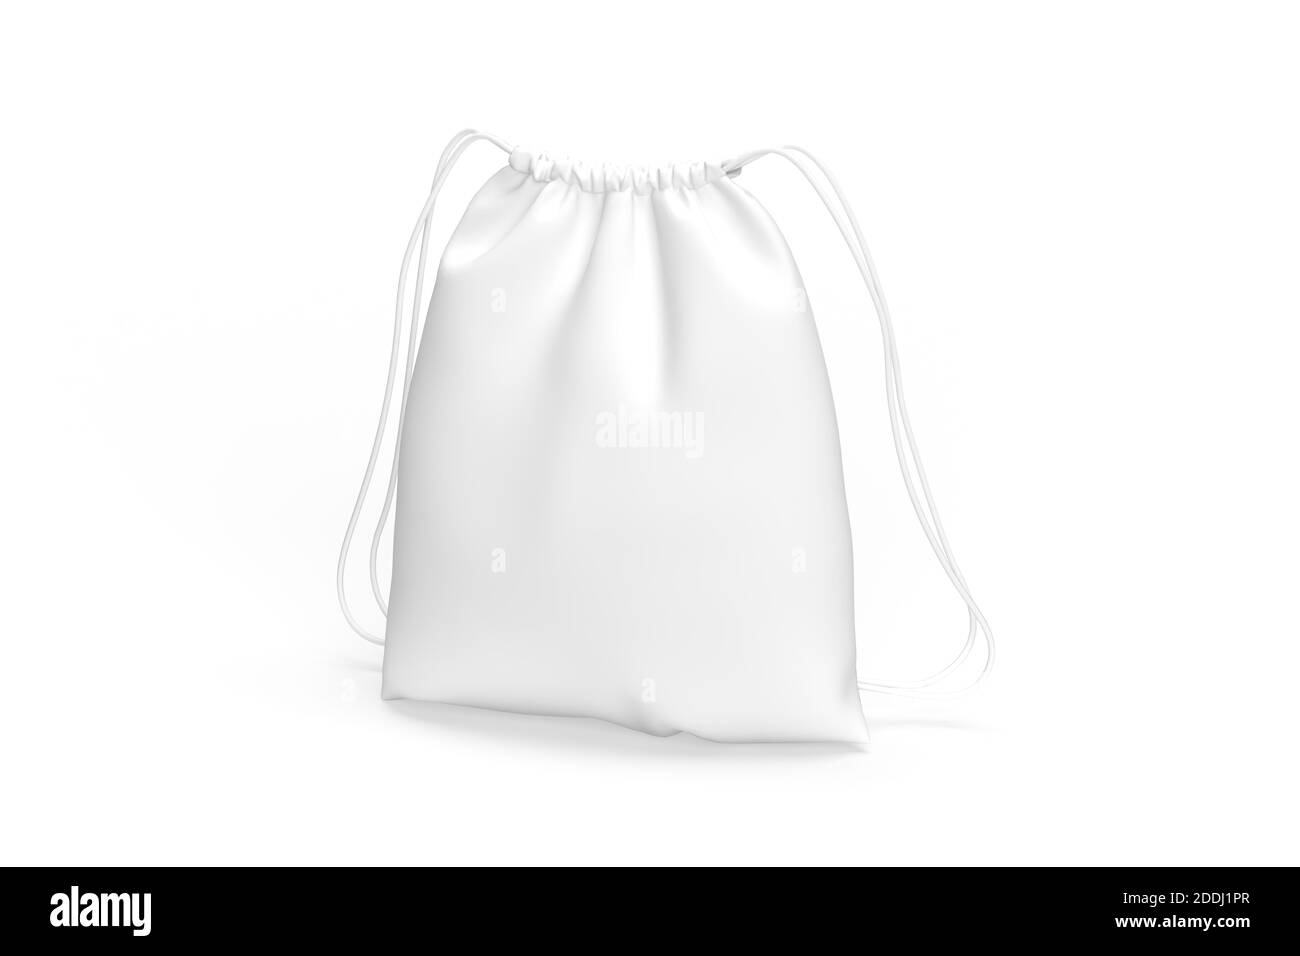 Drawstring bag mockup isolated on white background - 3d render Stock Photo  - Alamy